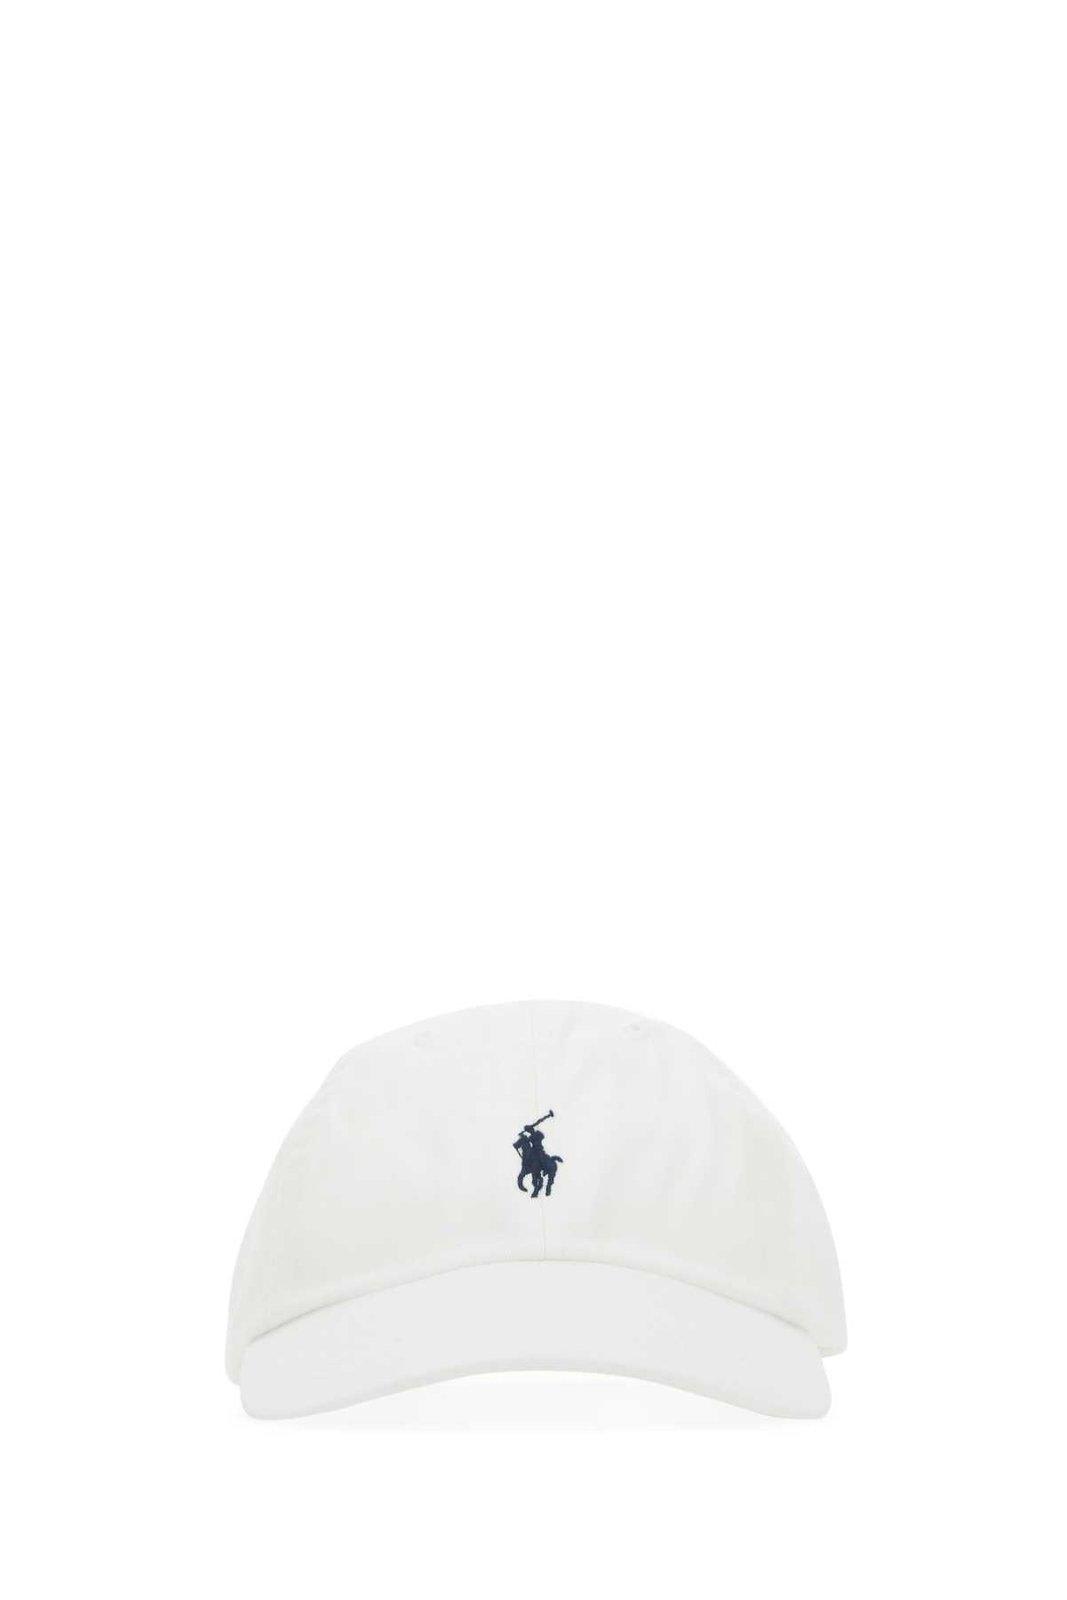 Ralph Lauren Logo Embroidered Curved Peak Baseball Cap